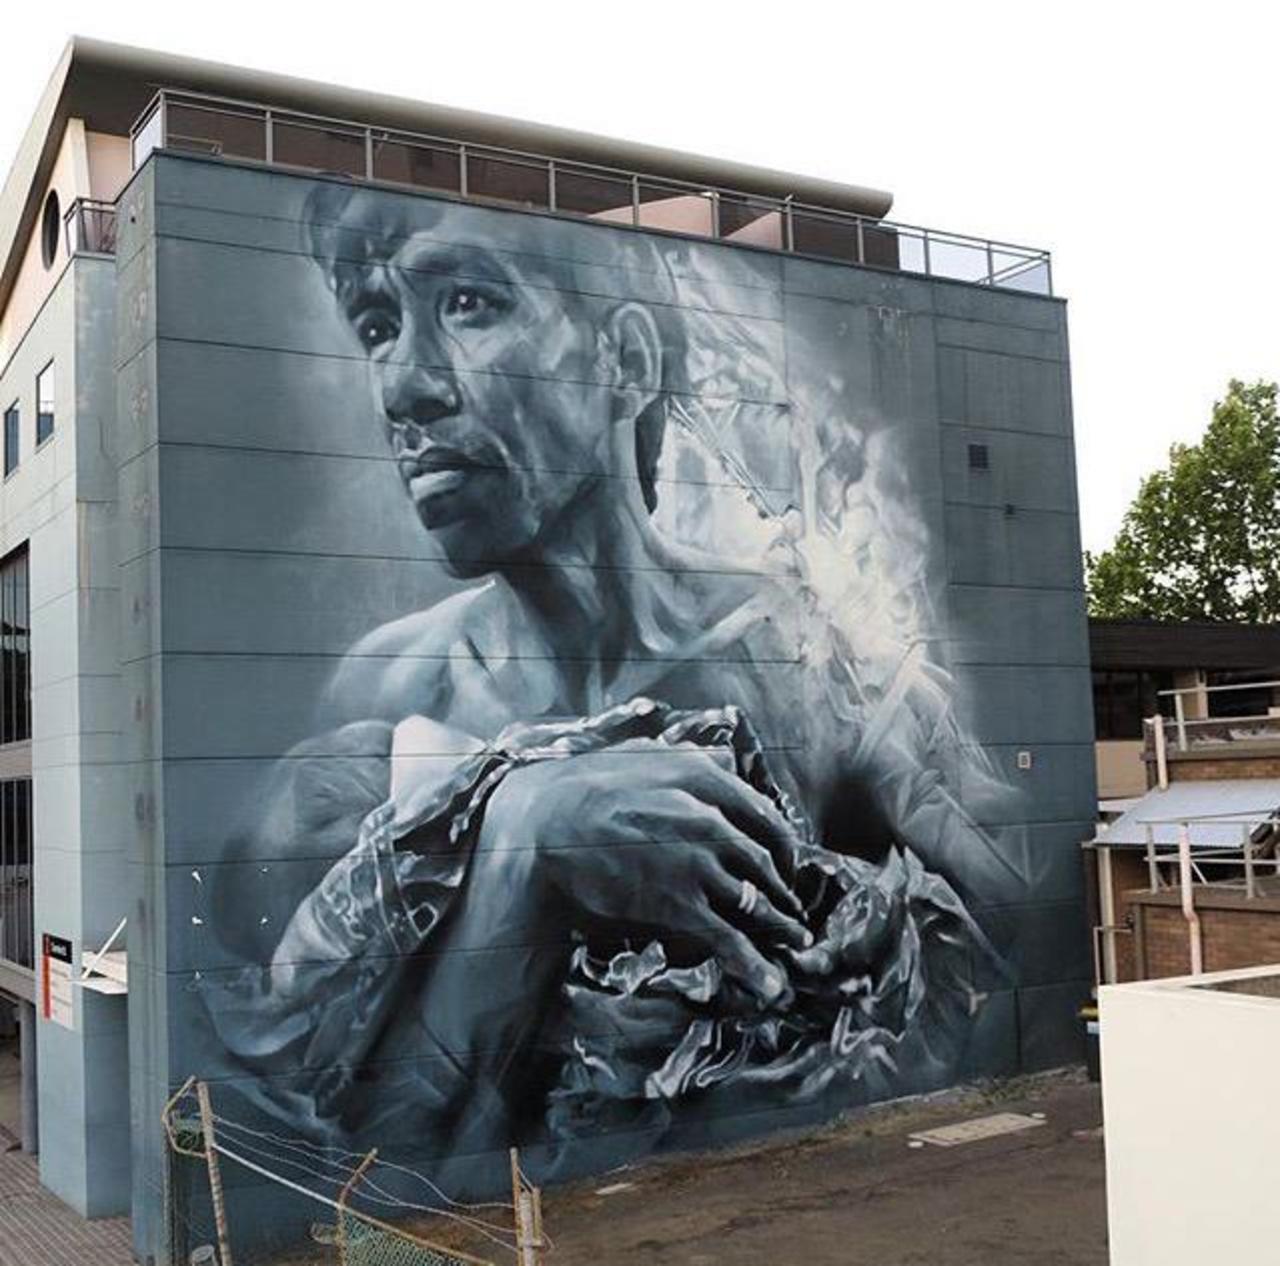 New Street Art by Guido Van Helten in Wollongong Australia 

#art #graffiti #mural #streetart http://t.co/BIB5PvQoG2